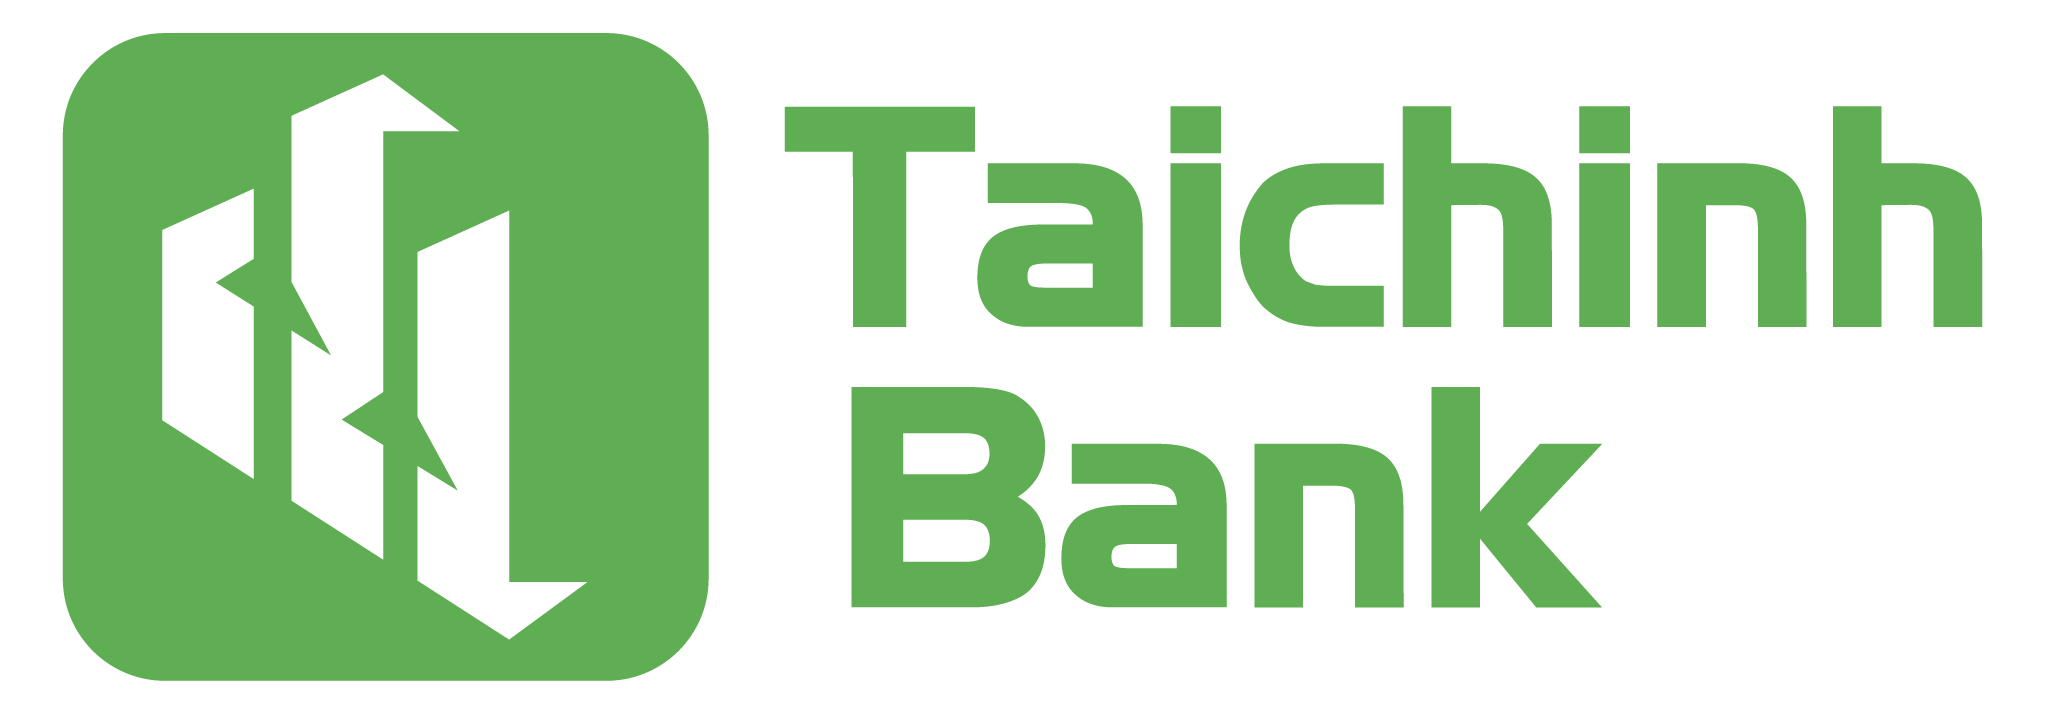 logo taichinhbank.com.vn